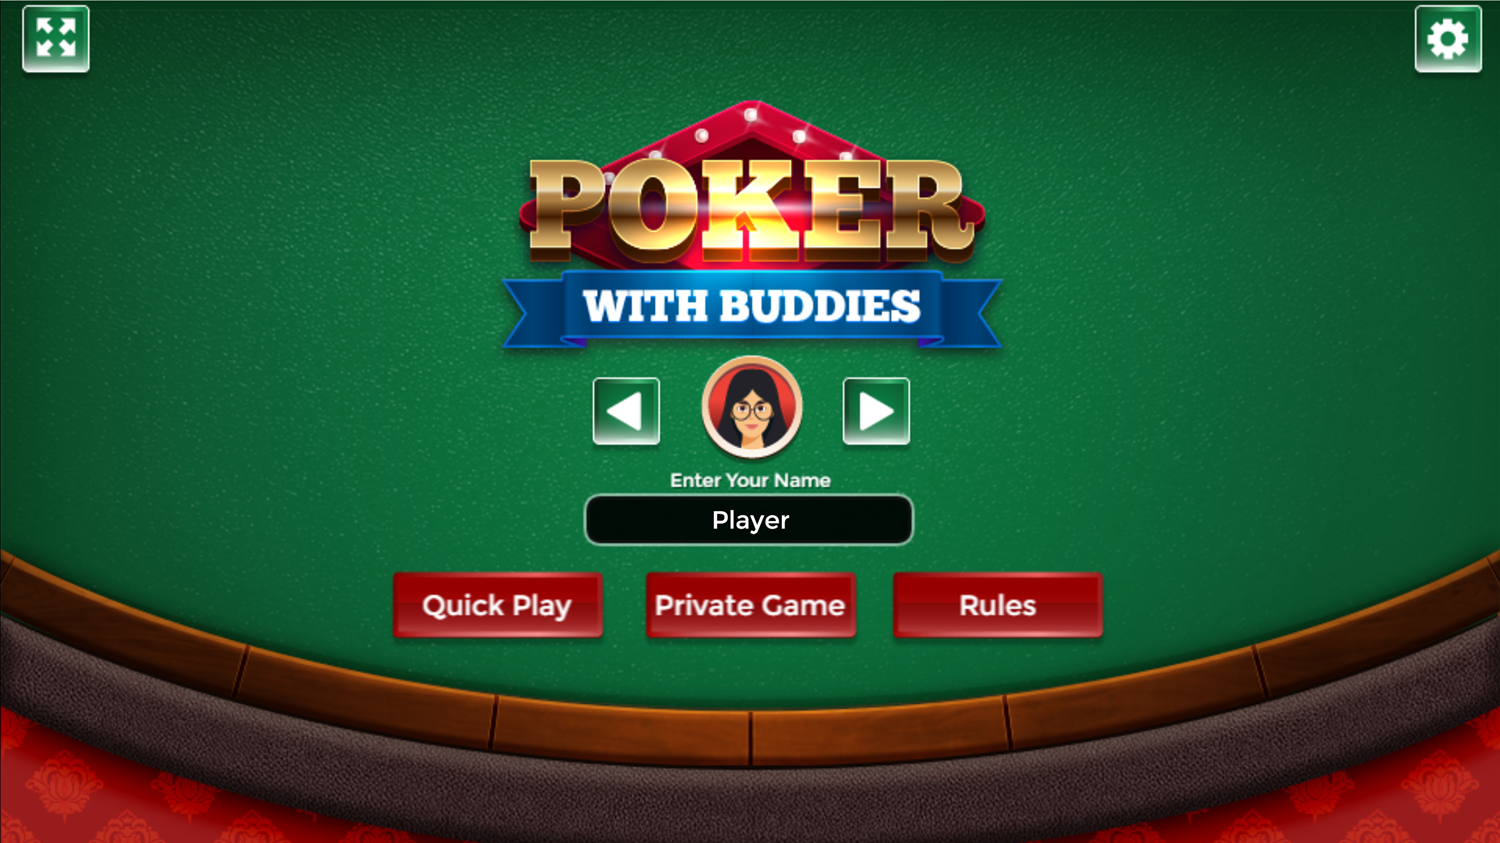 Poker With Buddies Game Welcome Screen Screenshot.